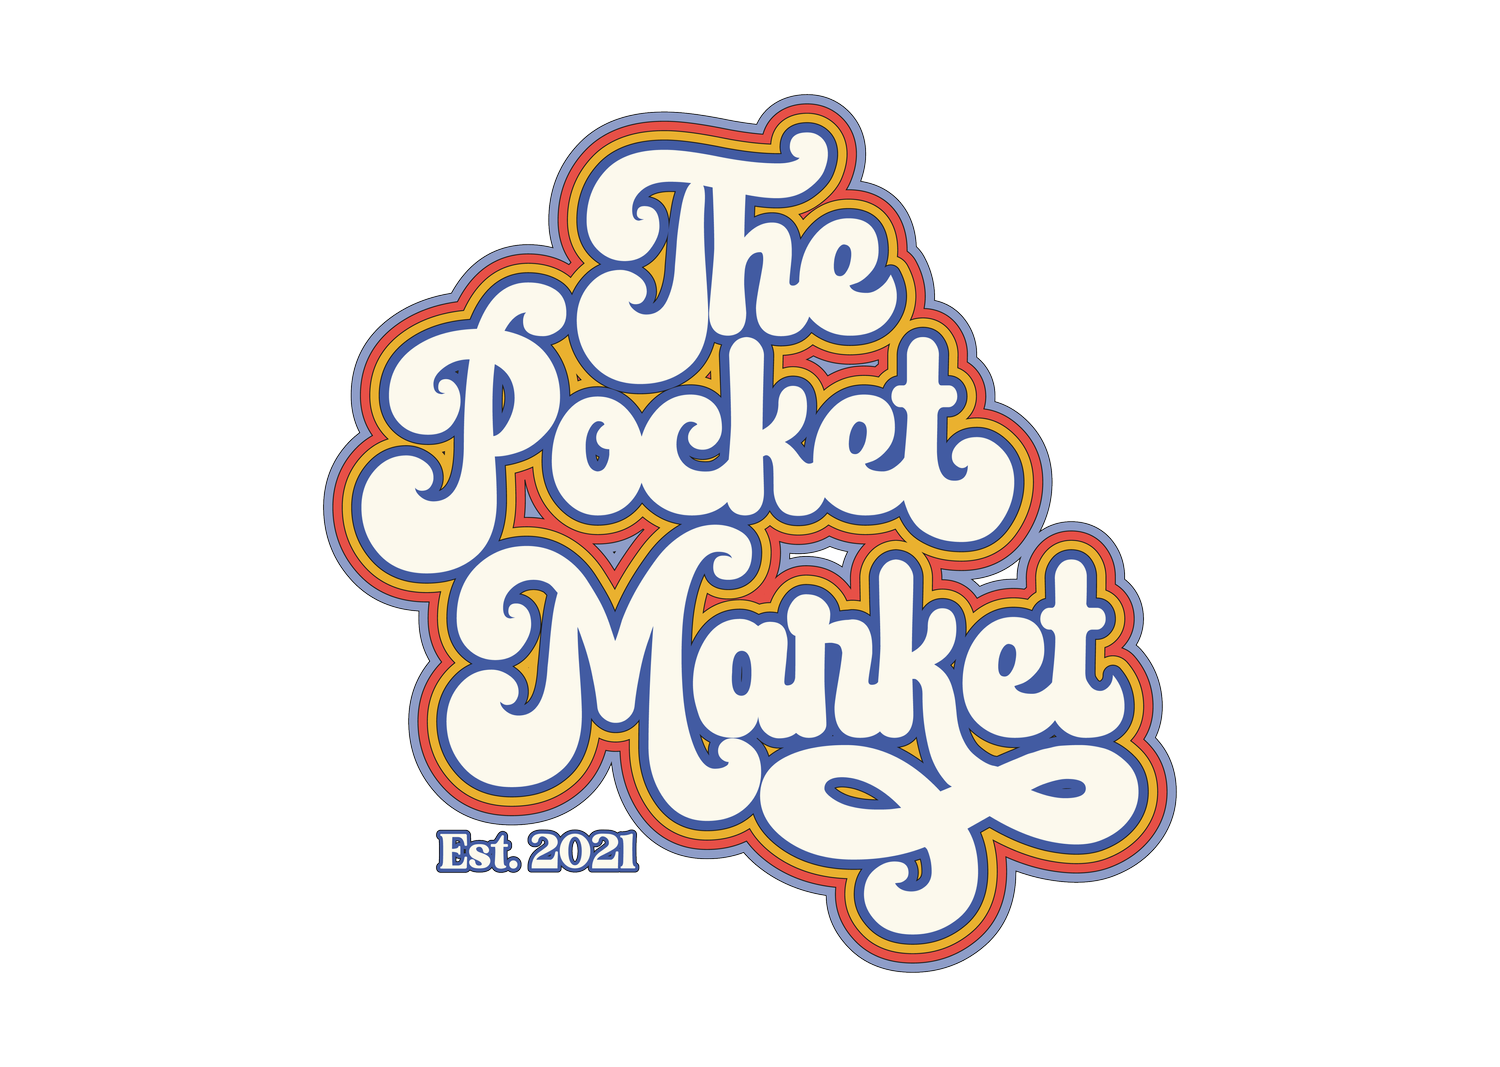 The Pocket Market